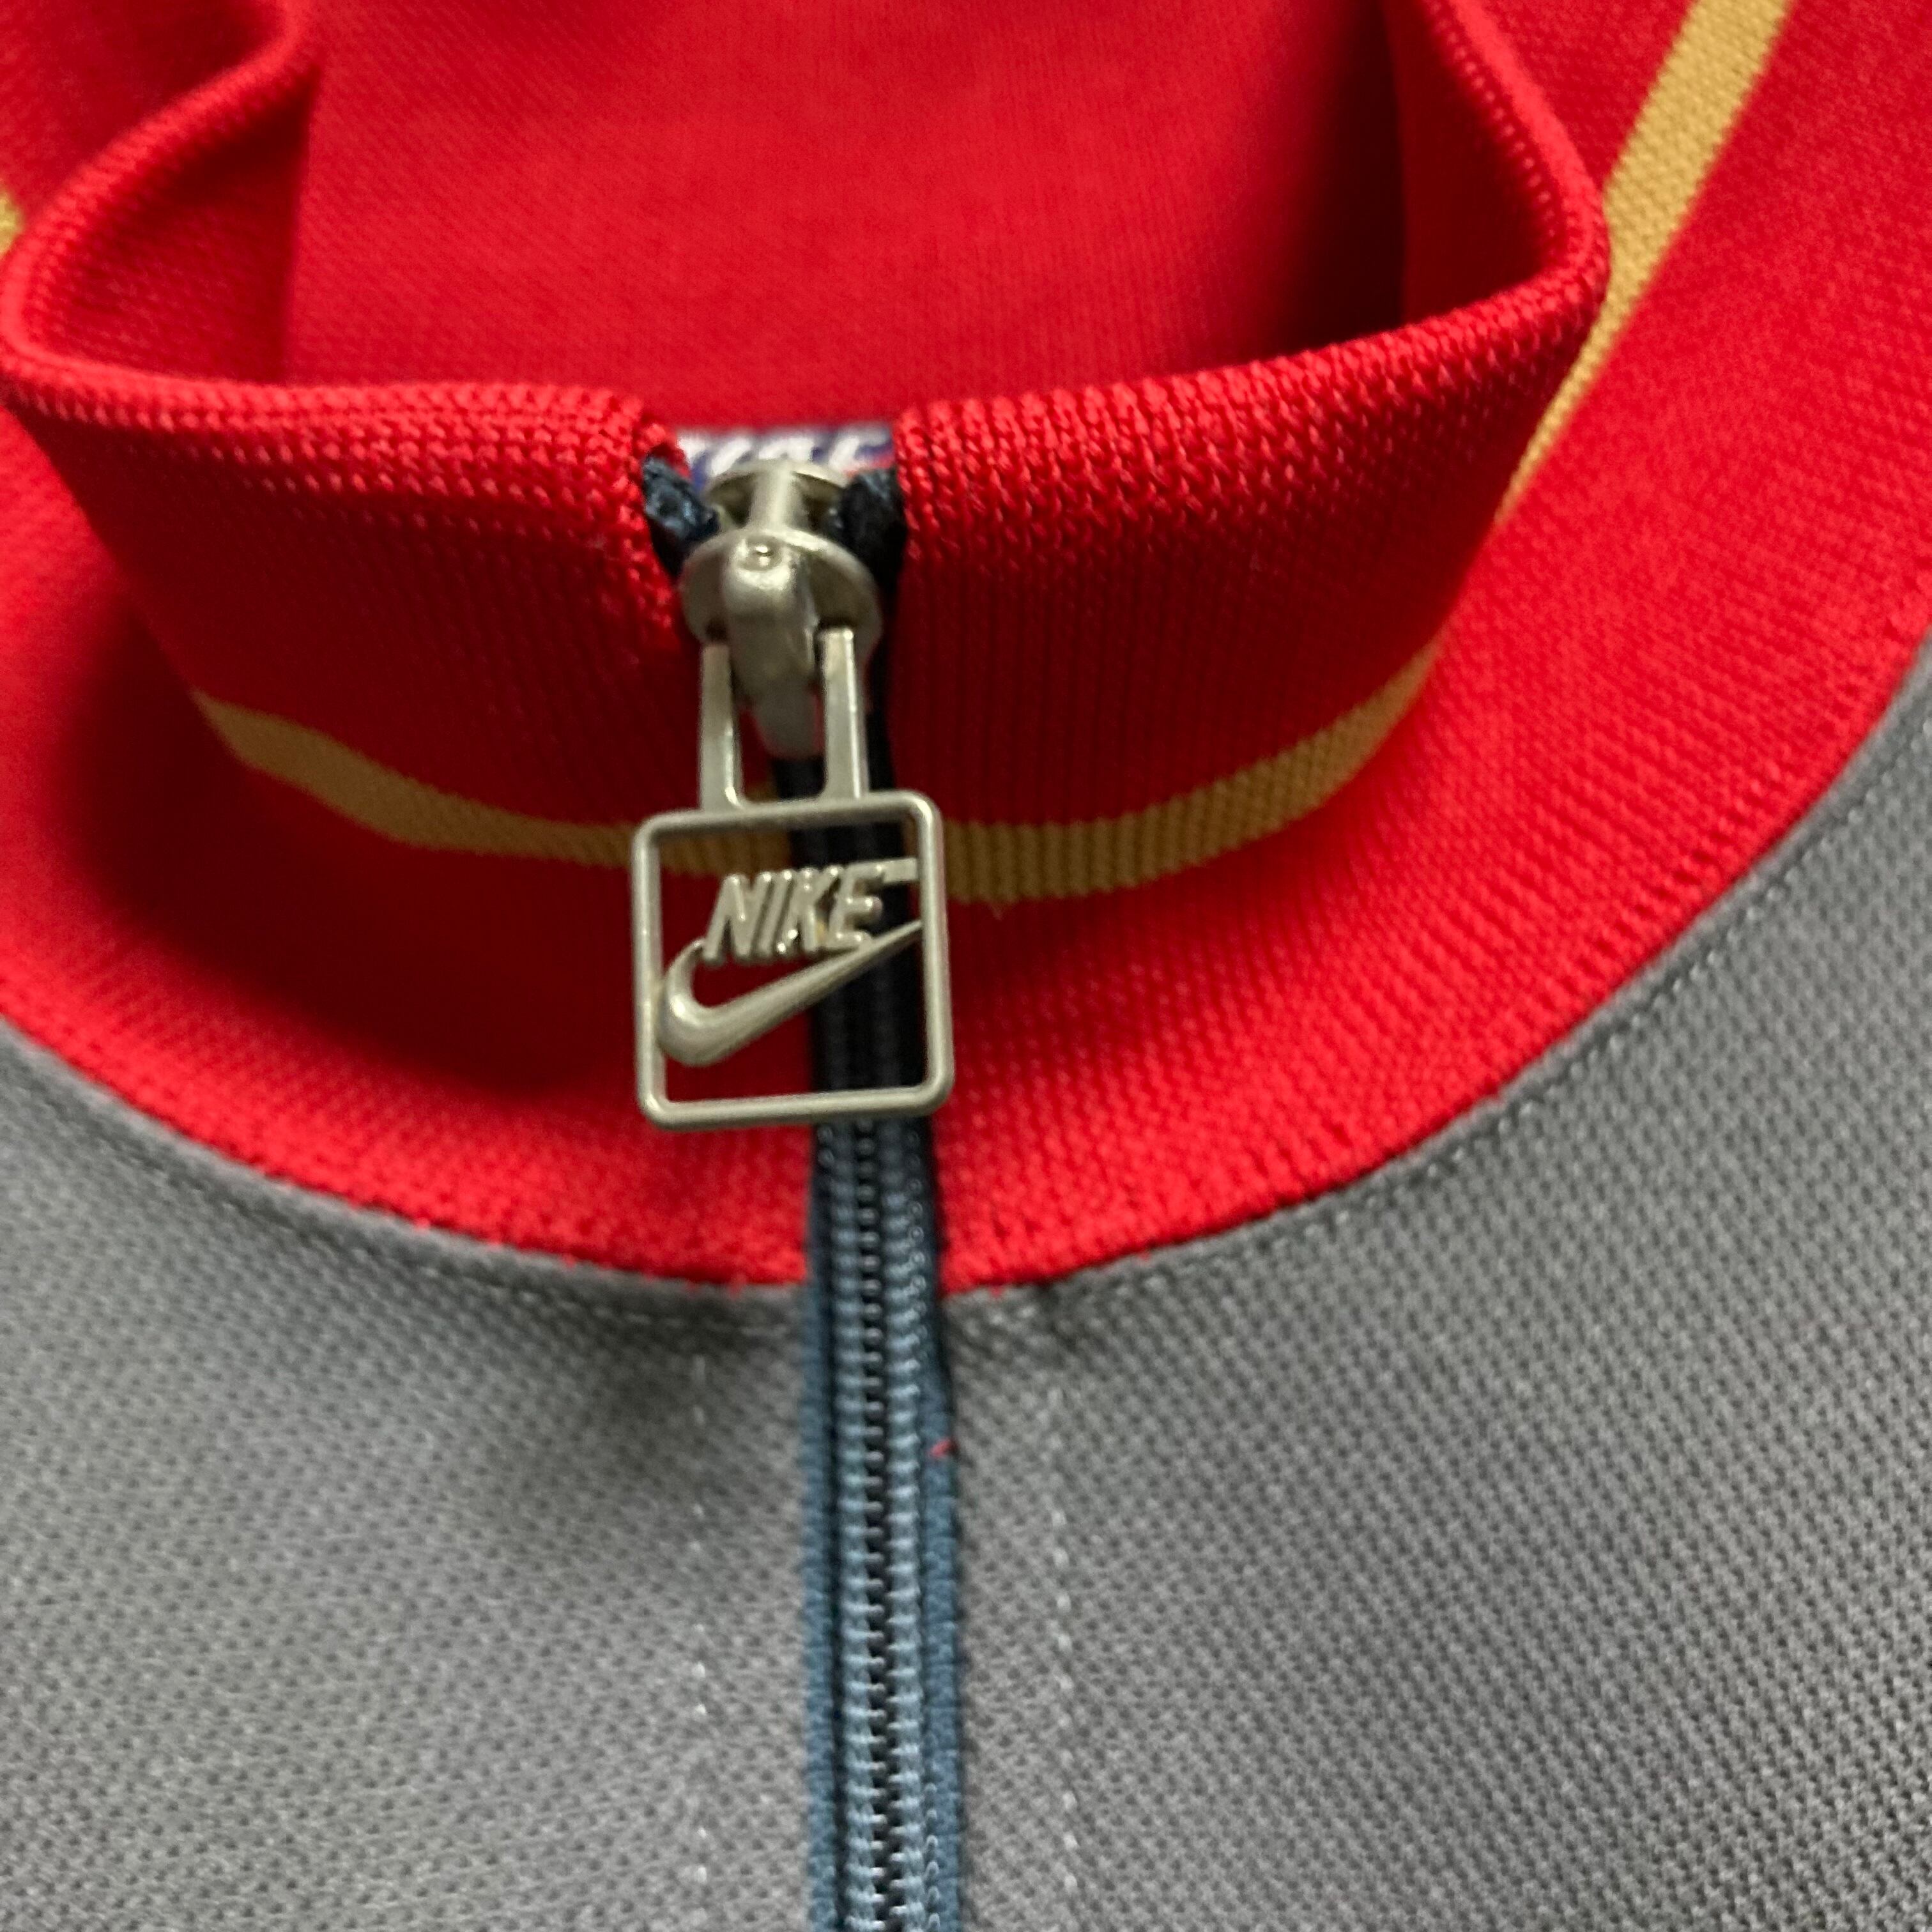 【NIKE】Track Jacket L 80s Made in JAPAN 紺タグ 胸ロゴ ロゴ刺繍 美品 トラックジャケット アウター 古着